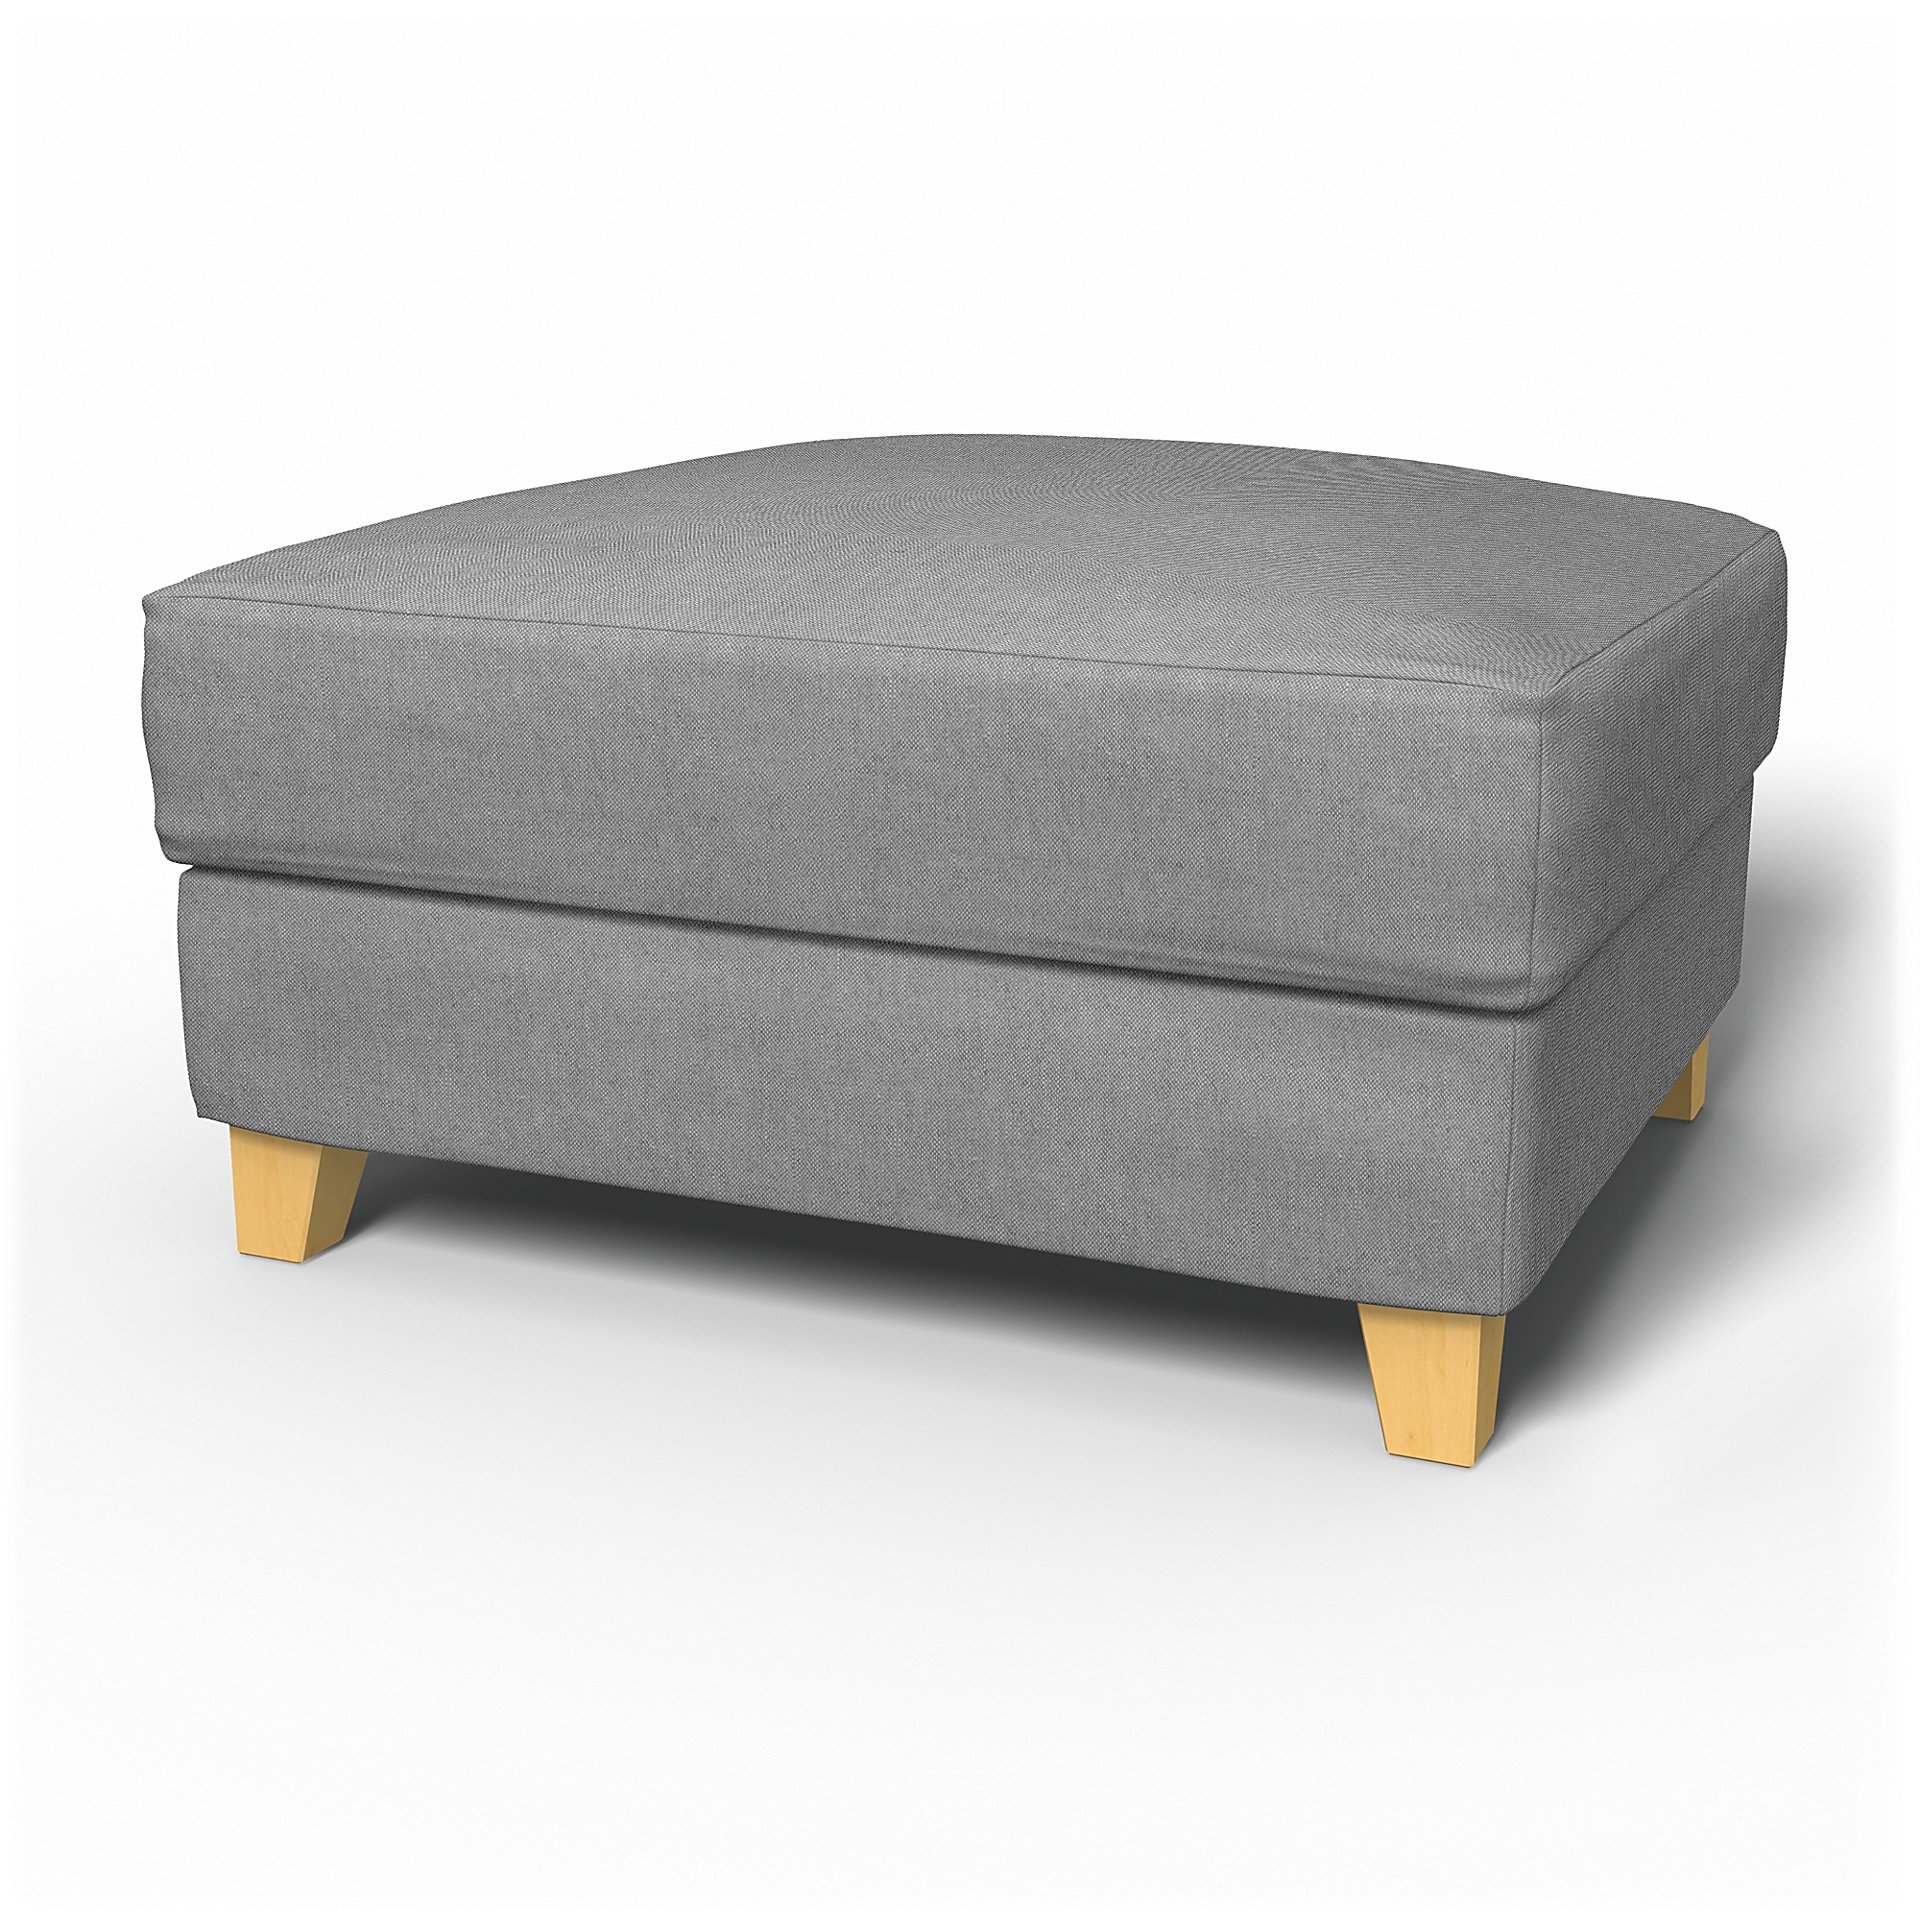 IKEA - Backa Footstool Cover, Graphite, Linen - Bemz